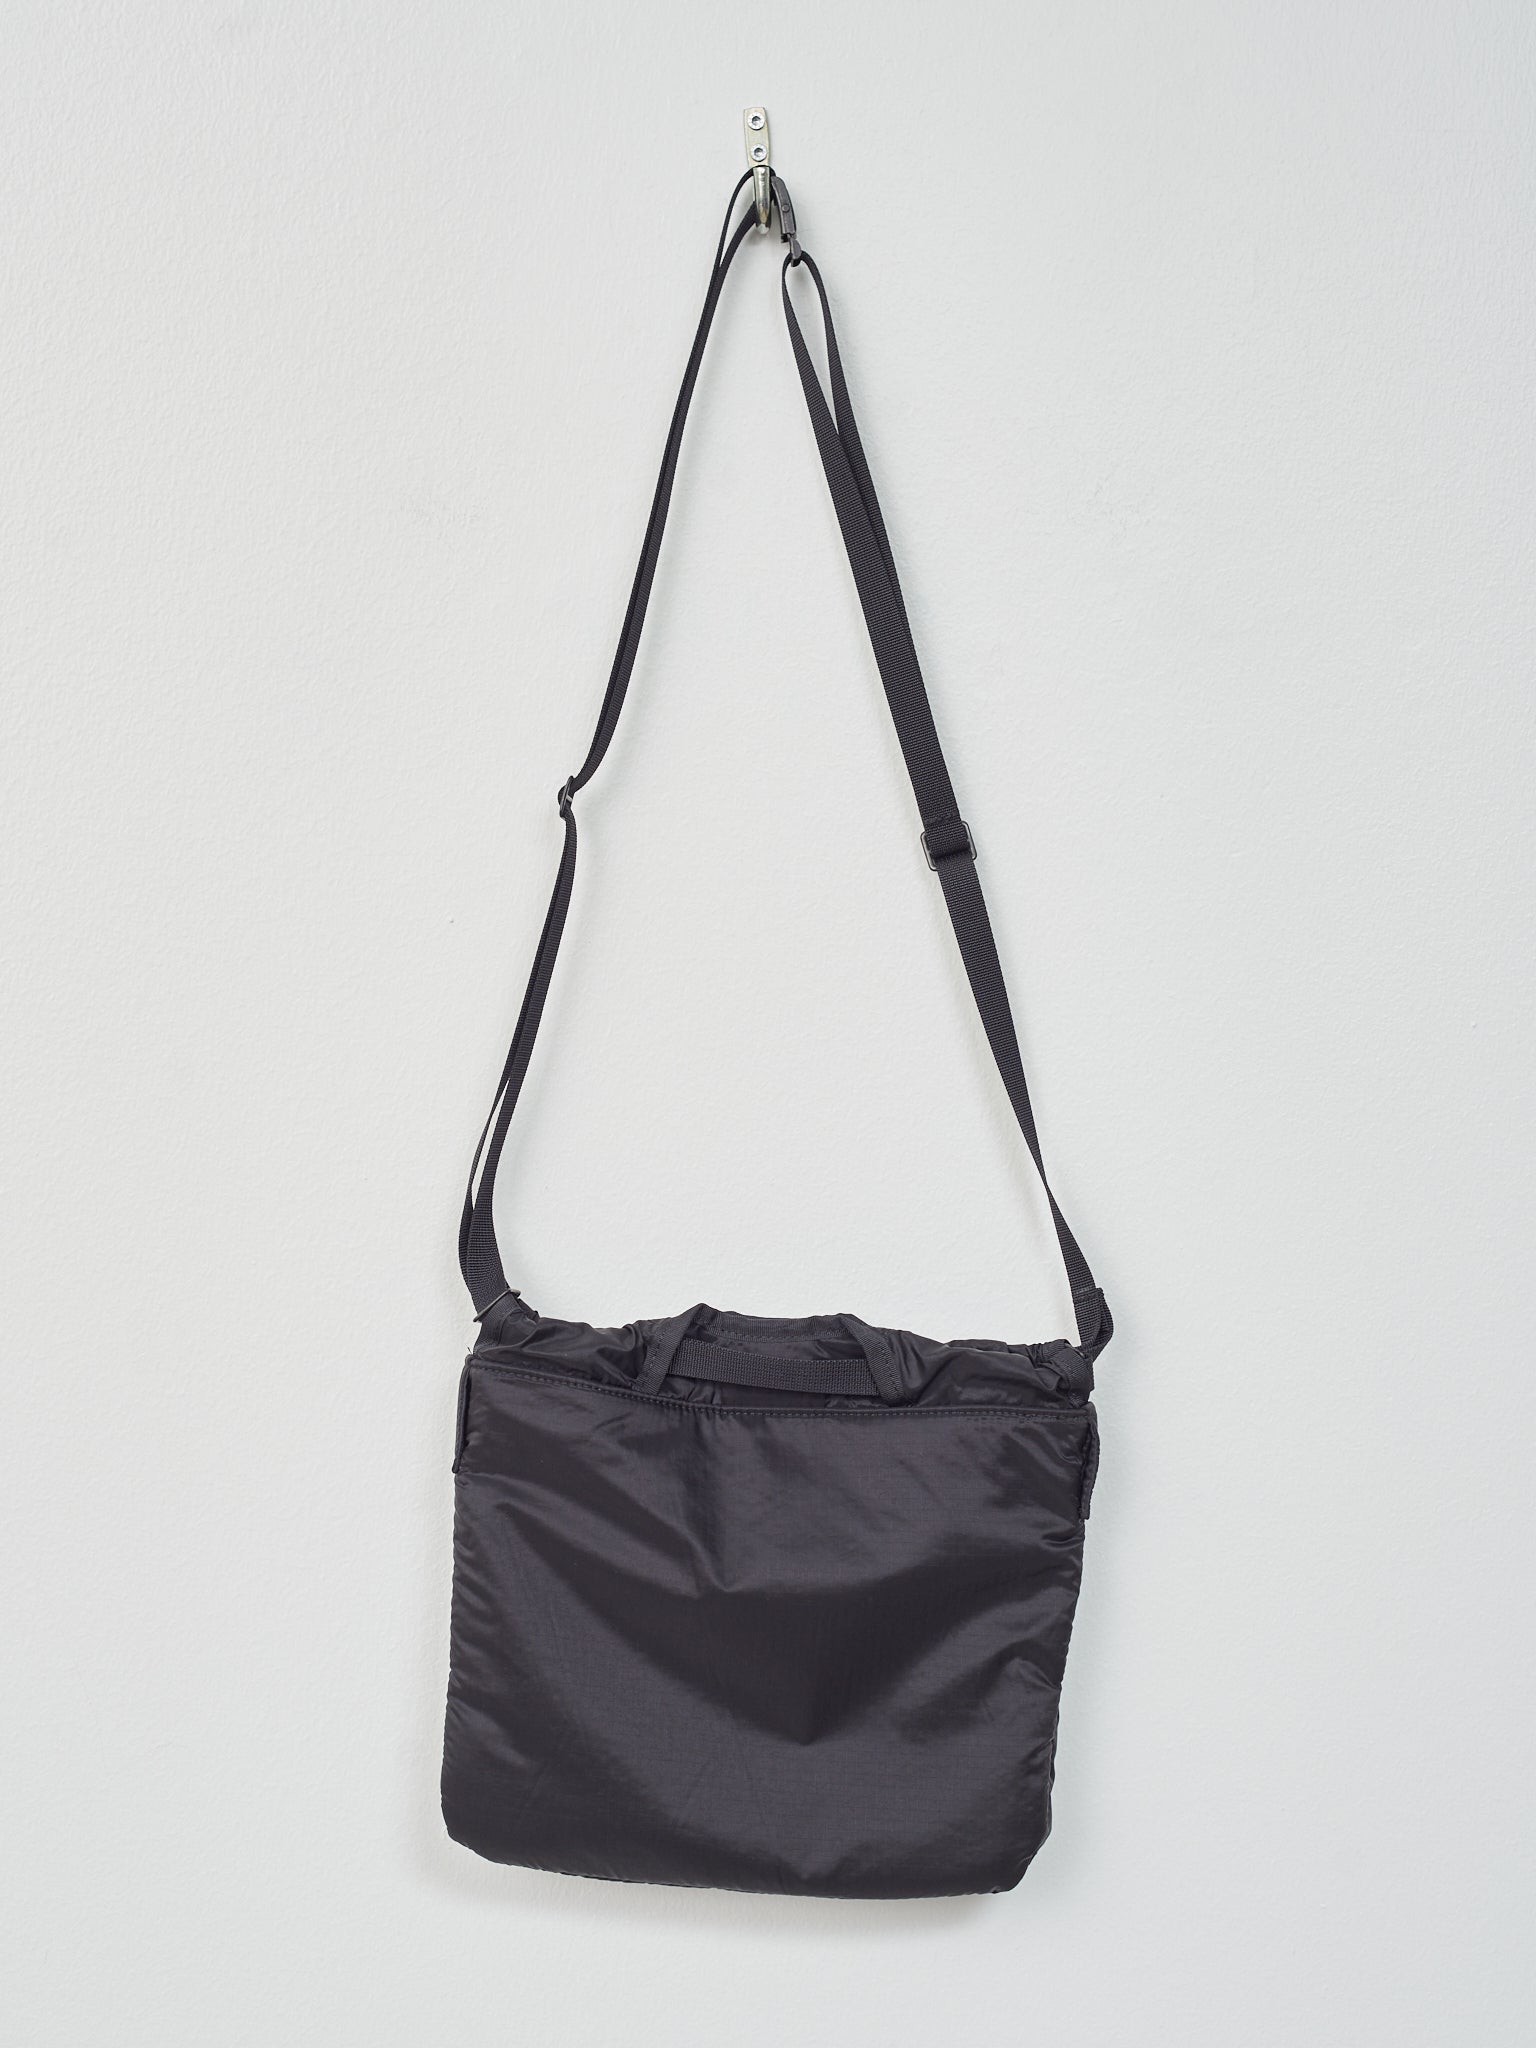 Namu Shop - Kaptain Sunshine Flight Bag S - Black